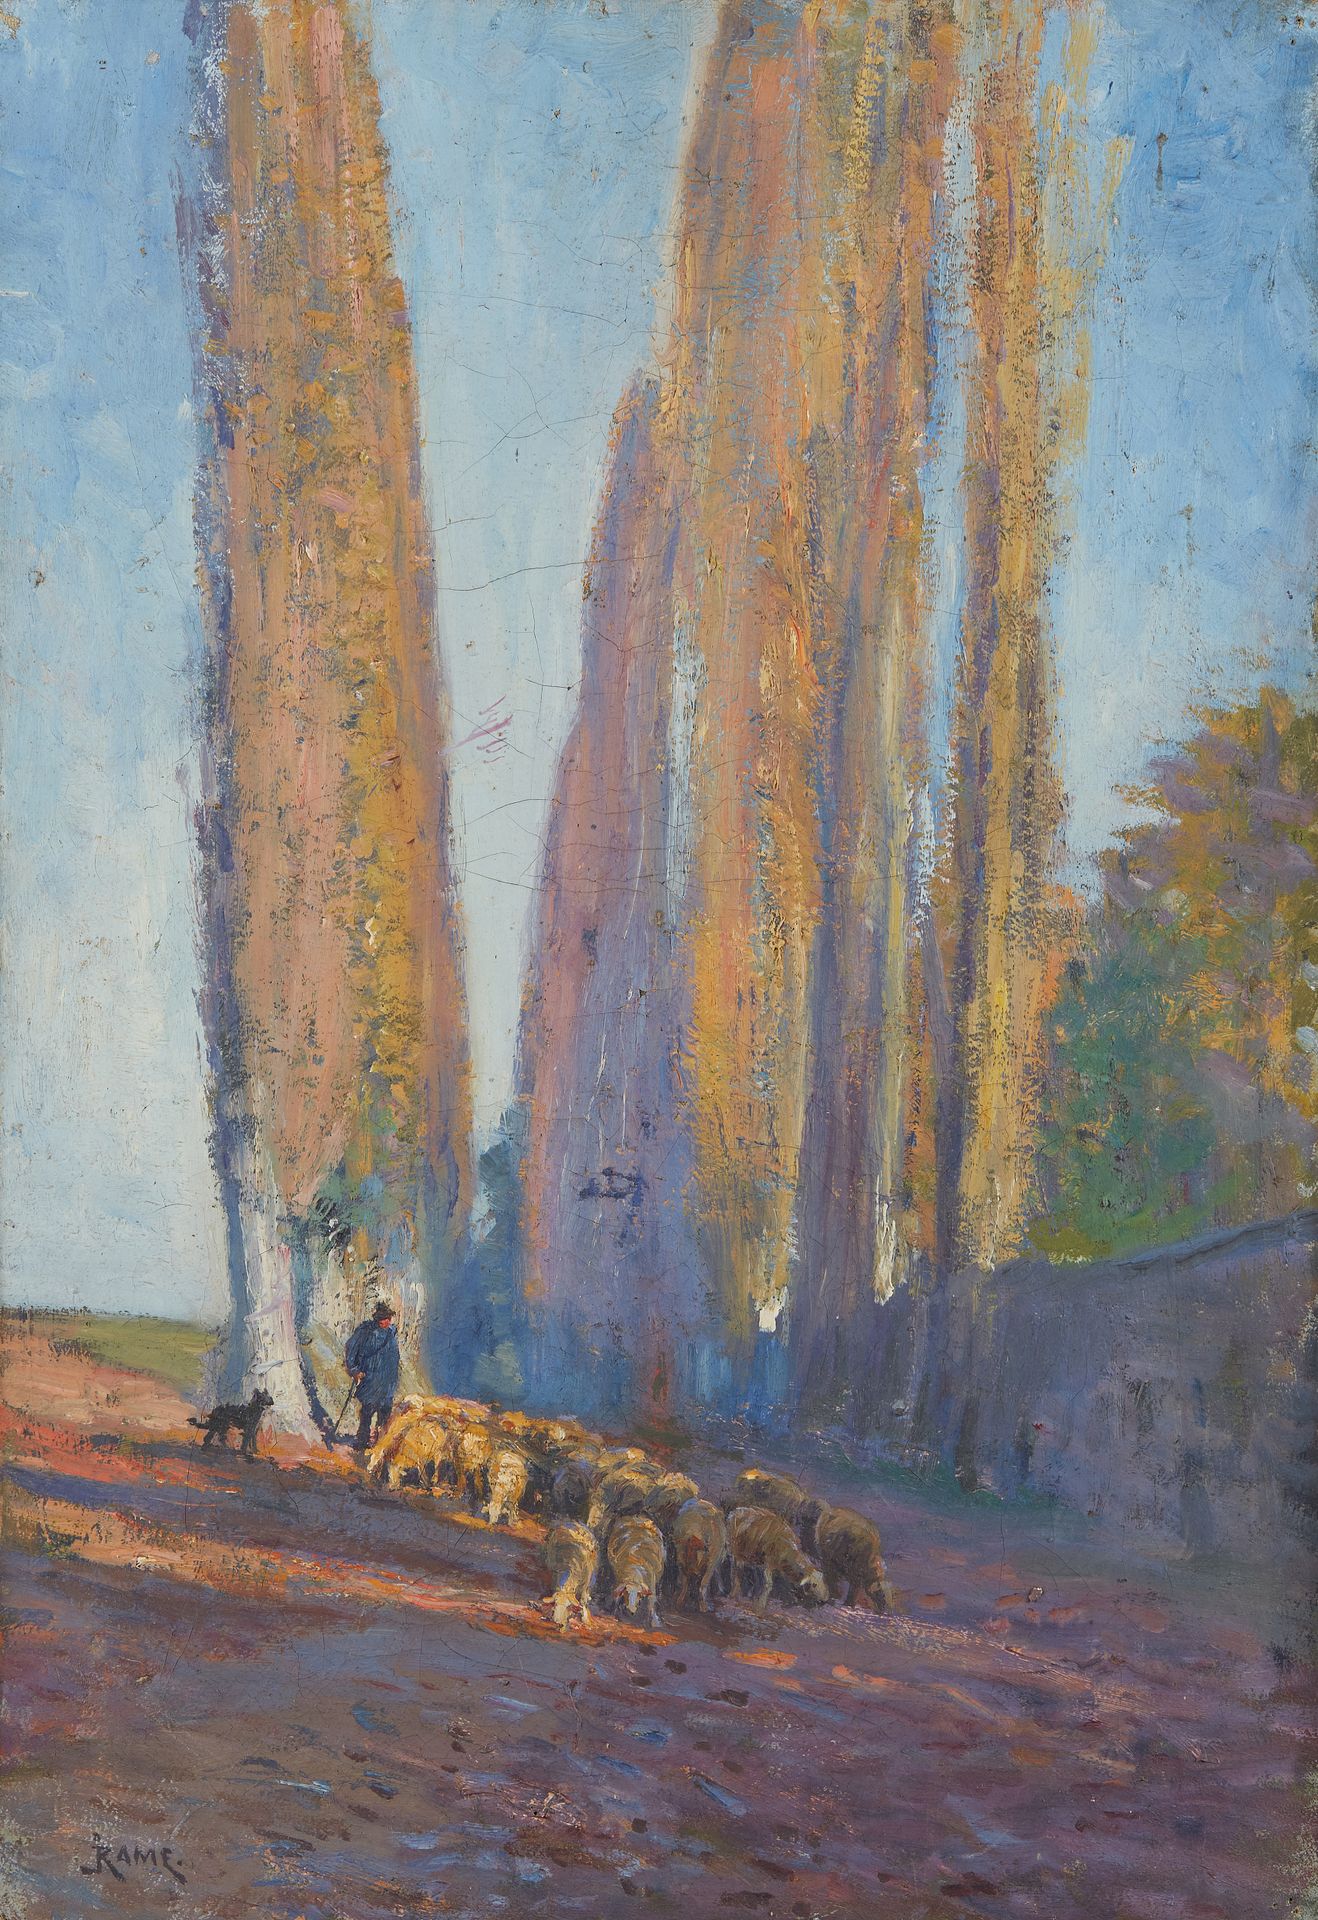 Null Jules Louis RAME (1855 - 1927)

Pastores de ovejas

Óleo sobre lienzo.

Fir&hellip;